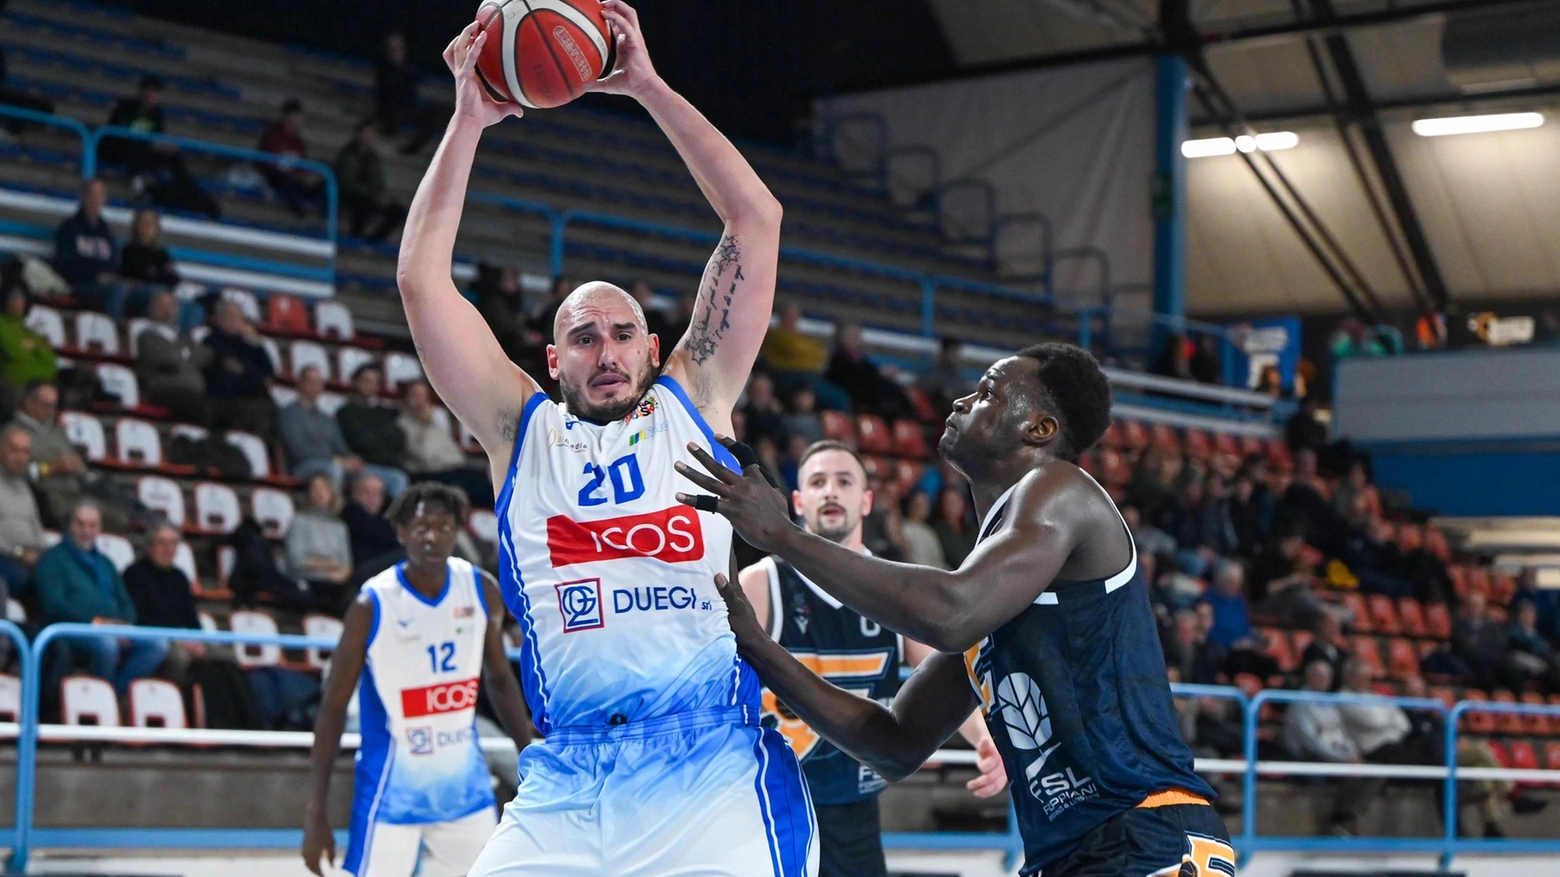 Ferrara Basket anticipa a Cernusco: "Tante insidie, l’approccio giusto"